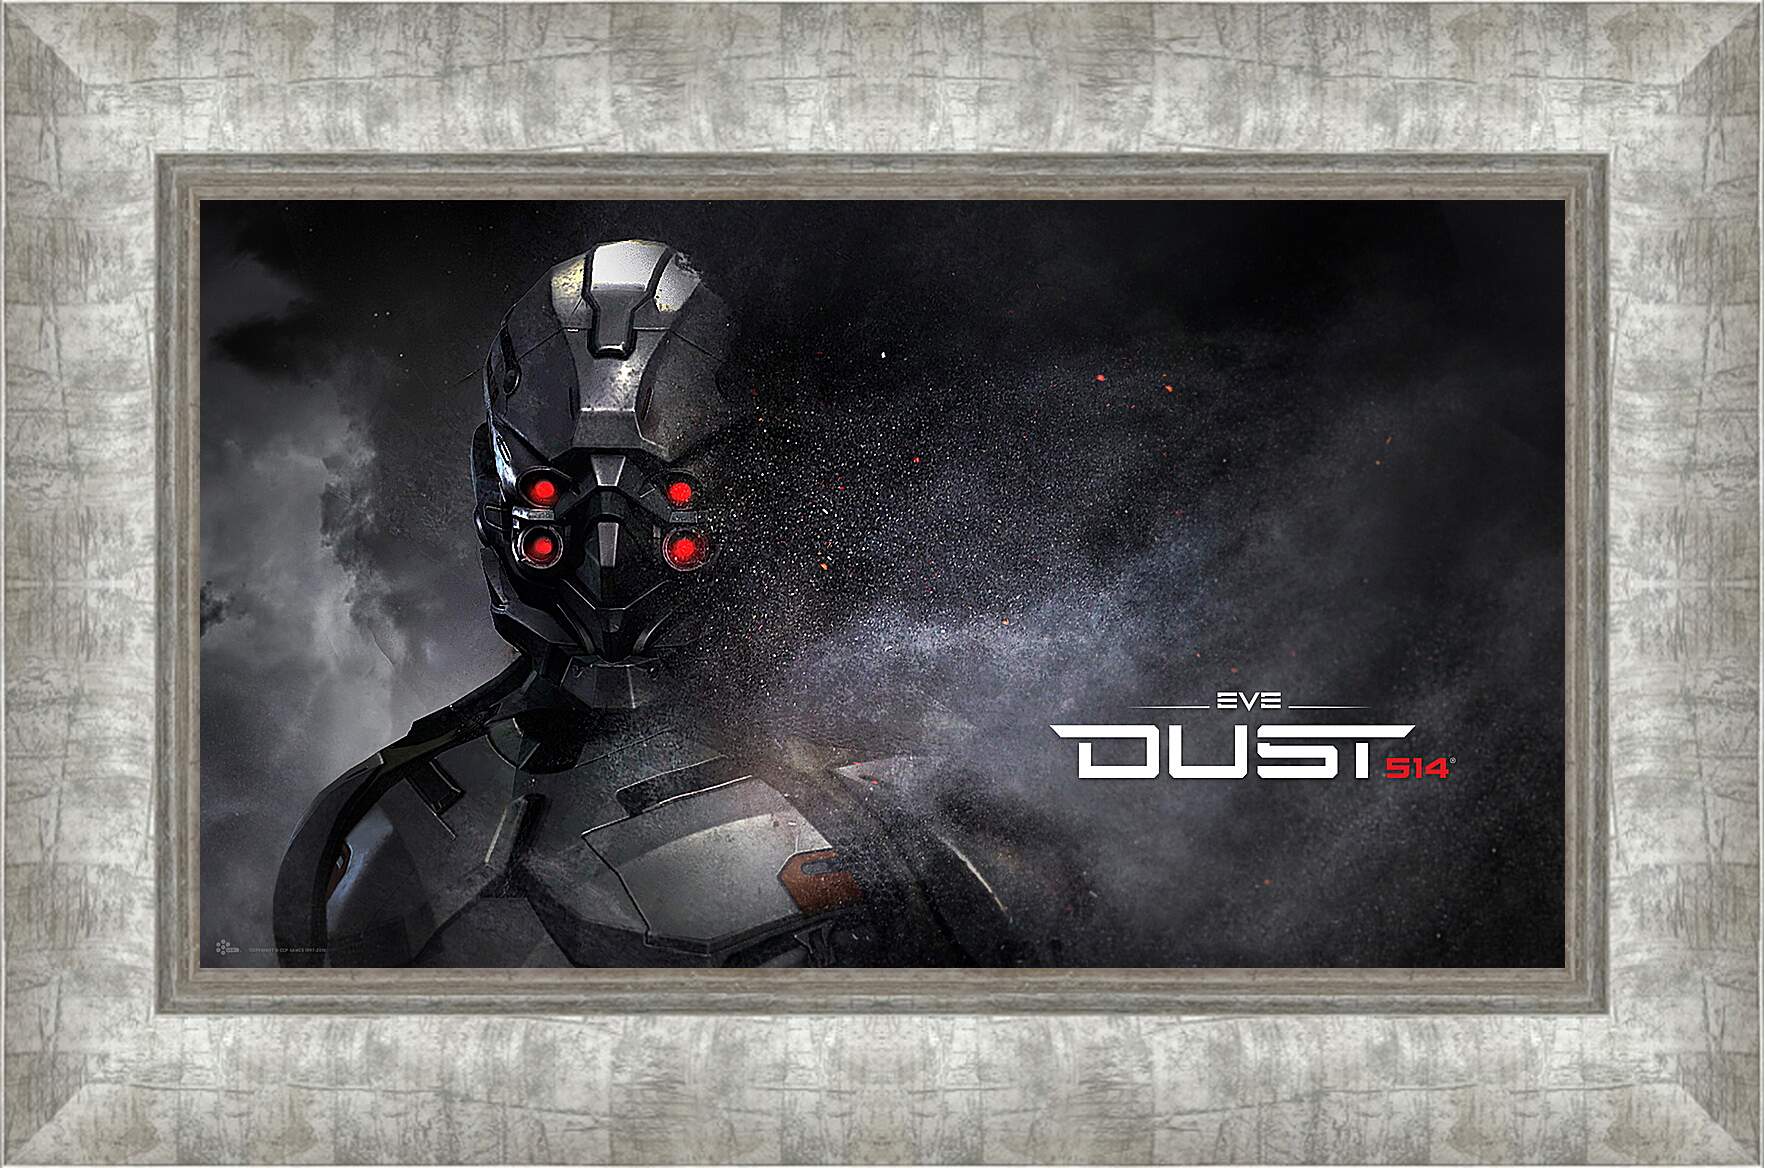 Картина в раме - Dust 514
